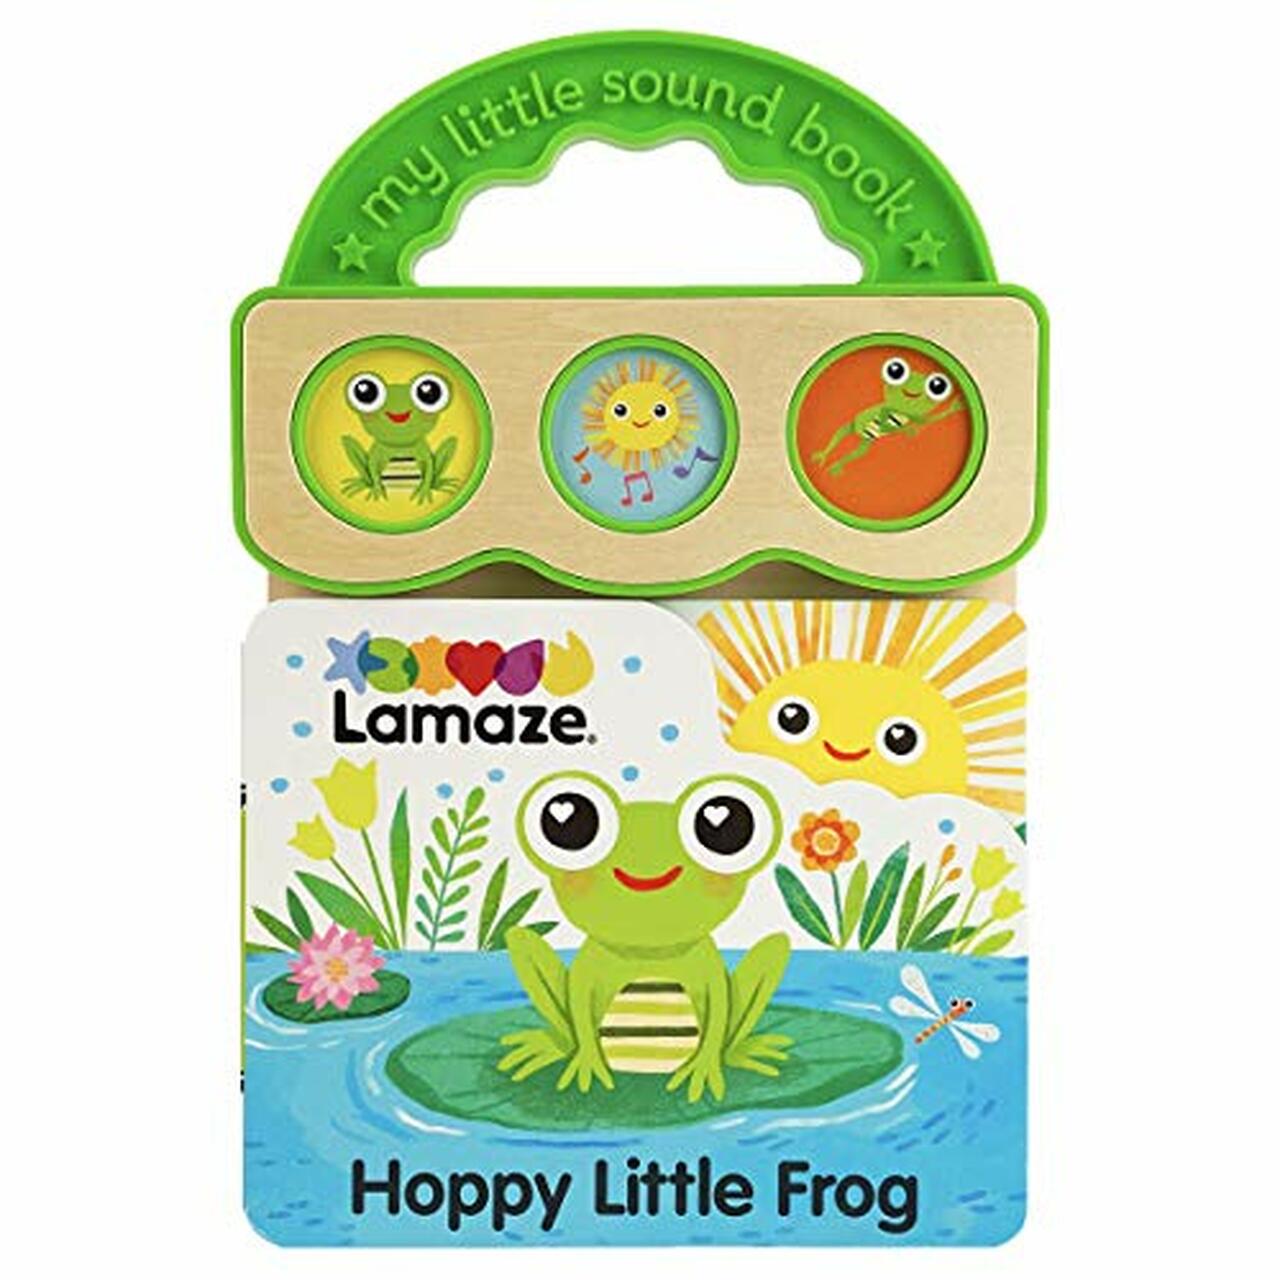 Cd 3 Button Sound: Hoppy Little Frog